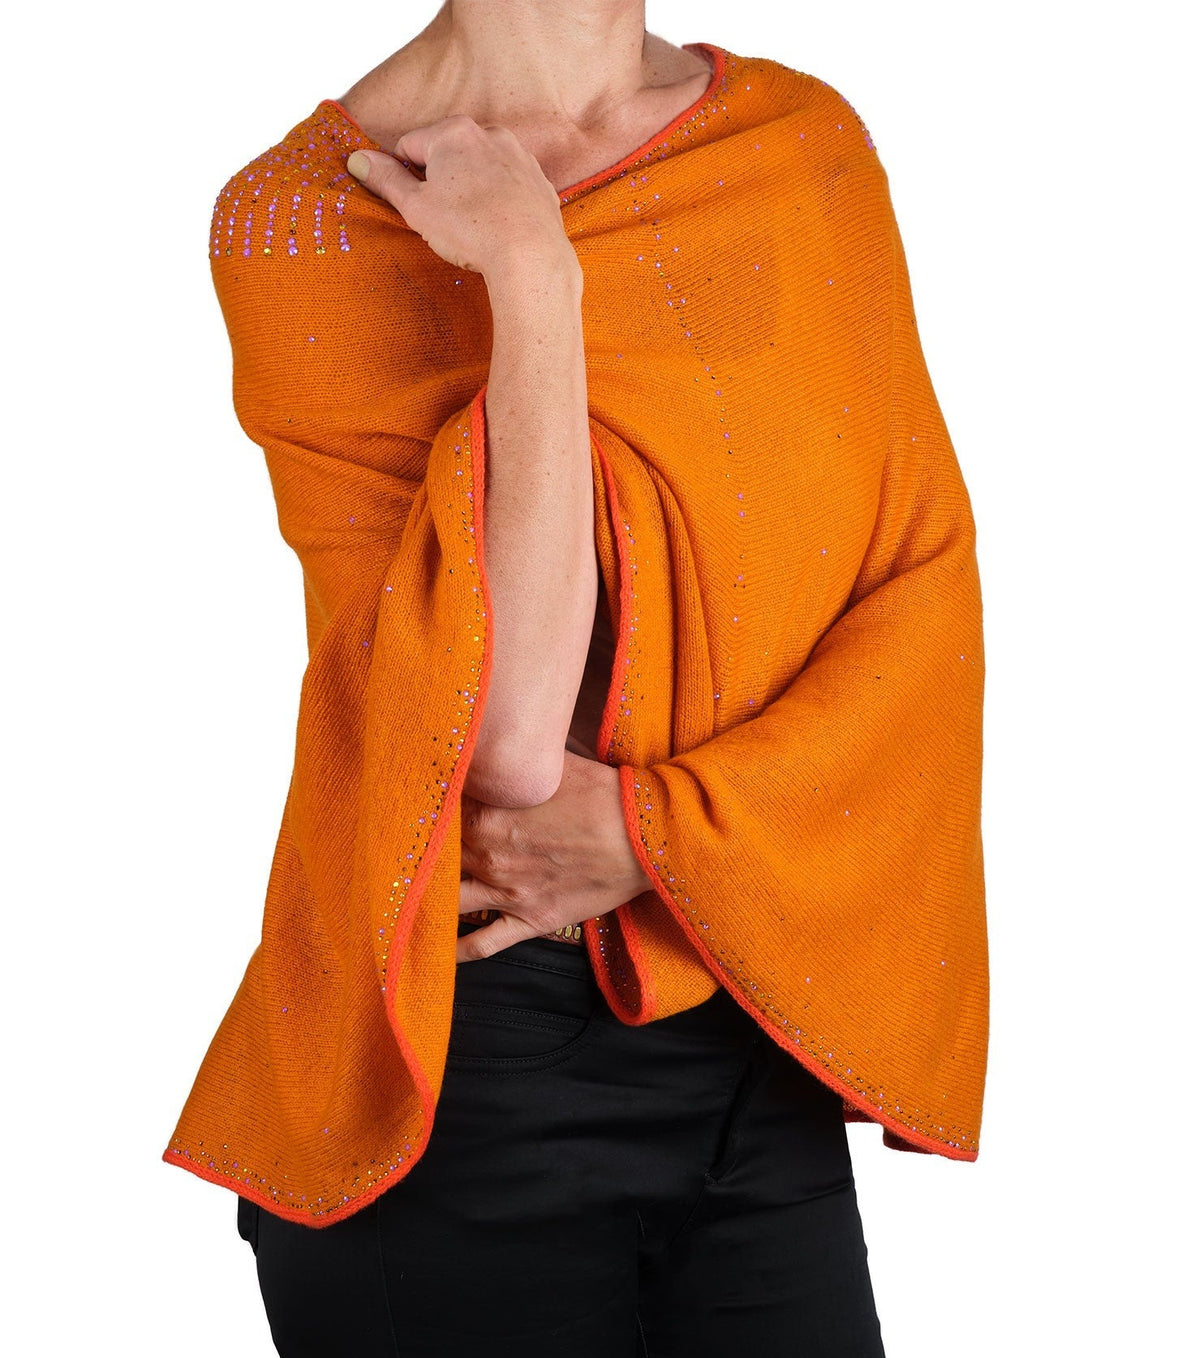 'Saffron' Tissue Weight Epaulette Poncho- size M/L